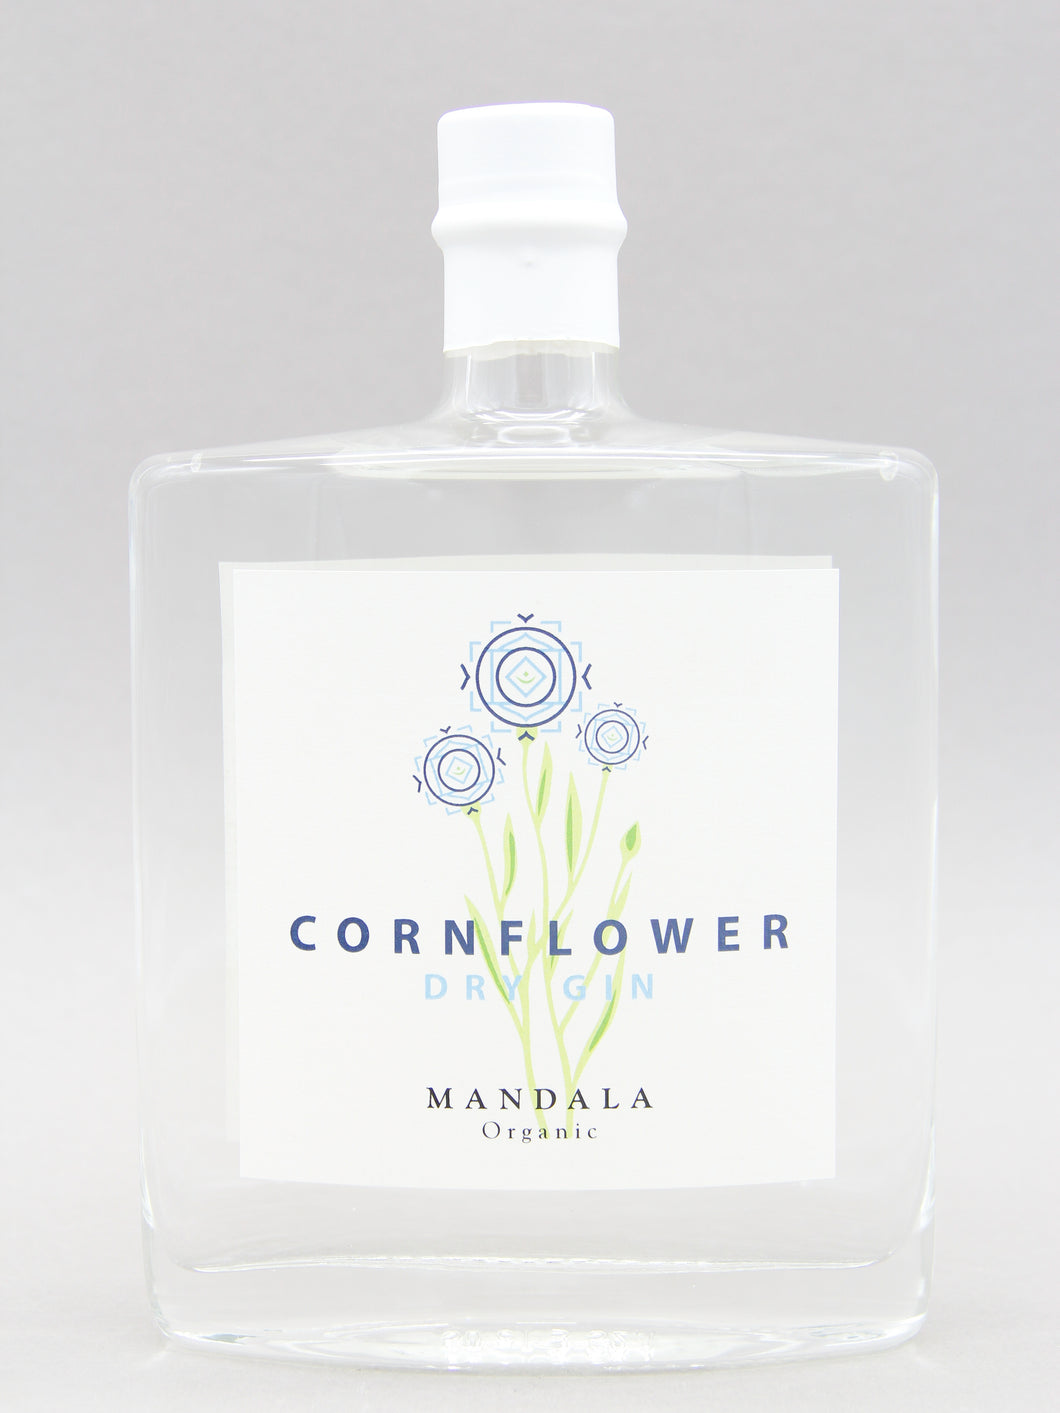 Mandala, Cornflower Dry Gin, Denmark, Organic (40.4%, 50cl)